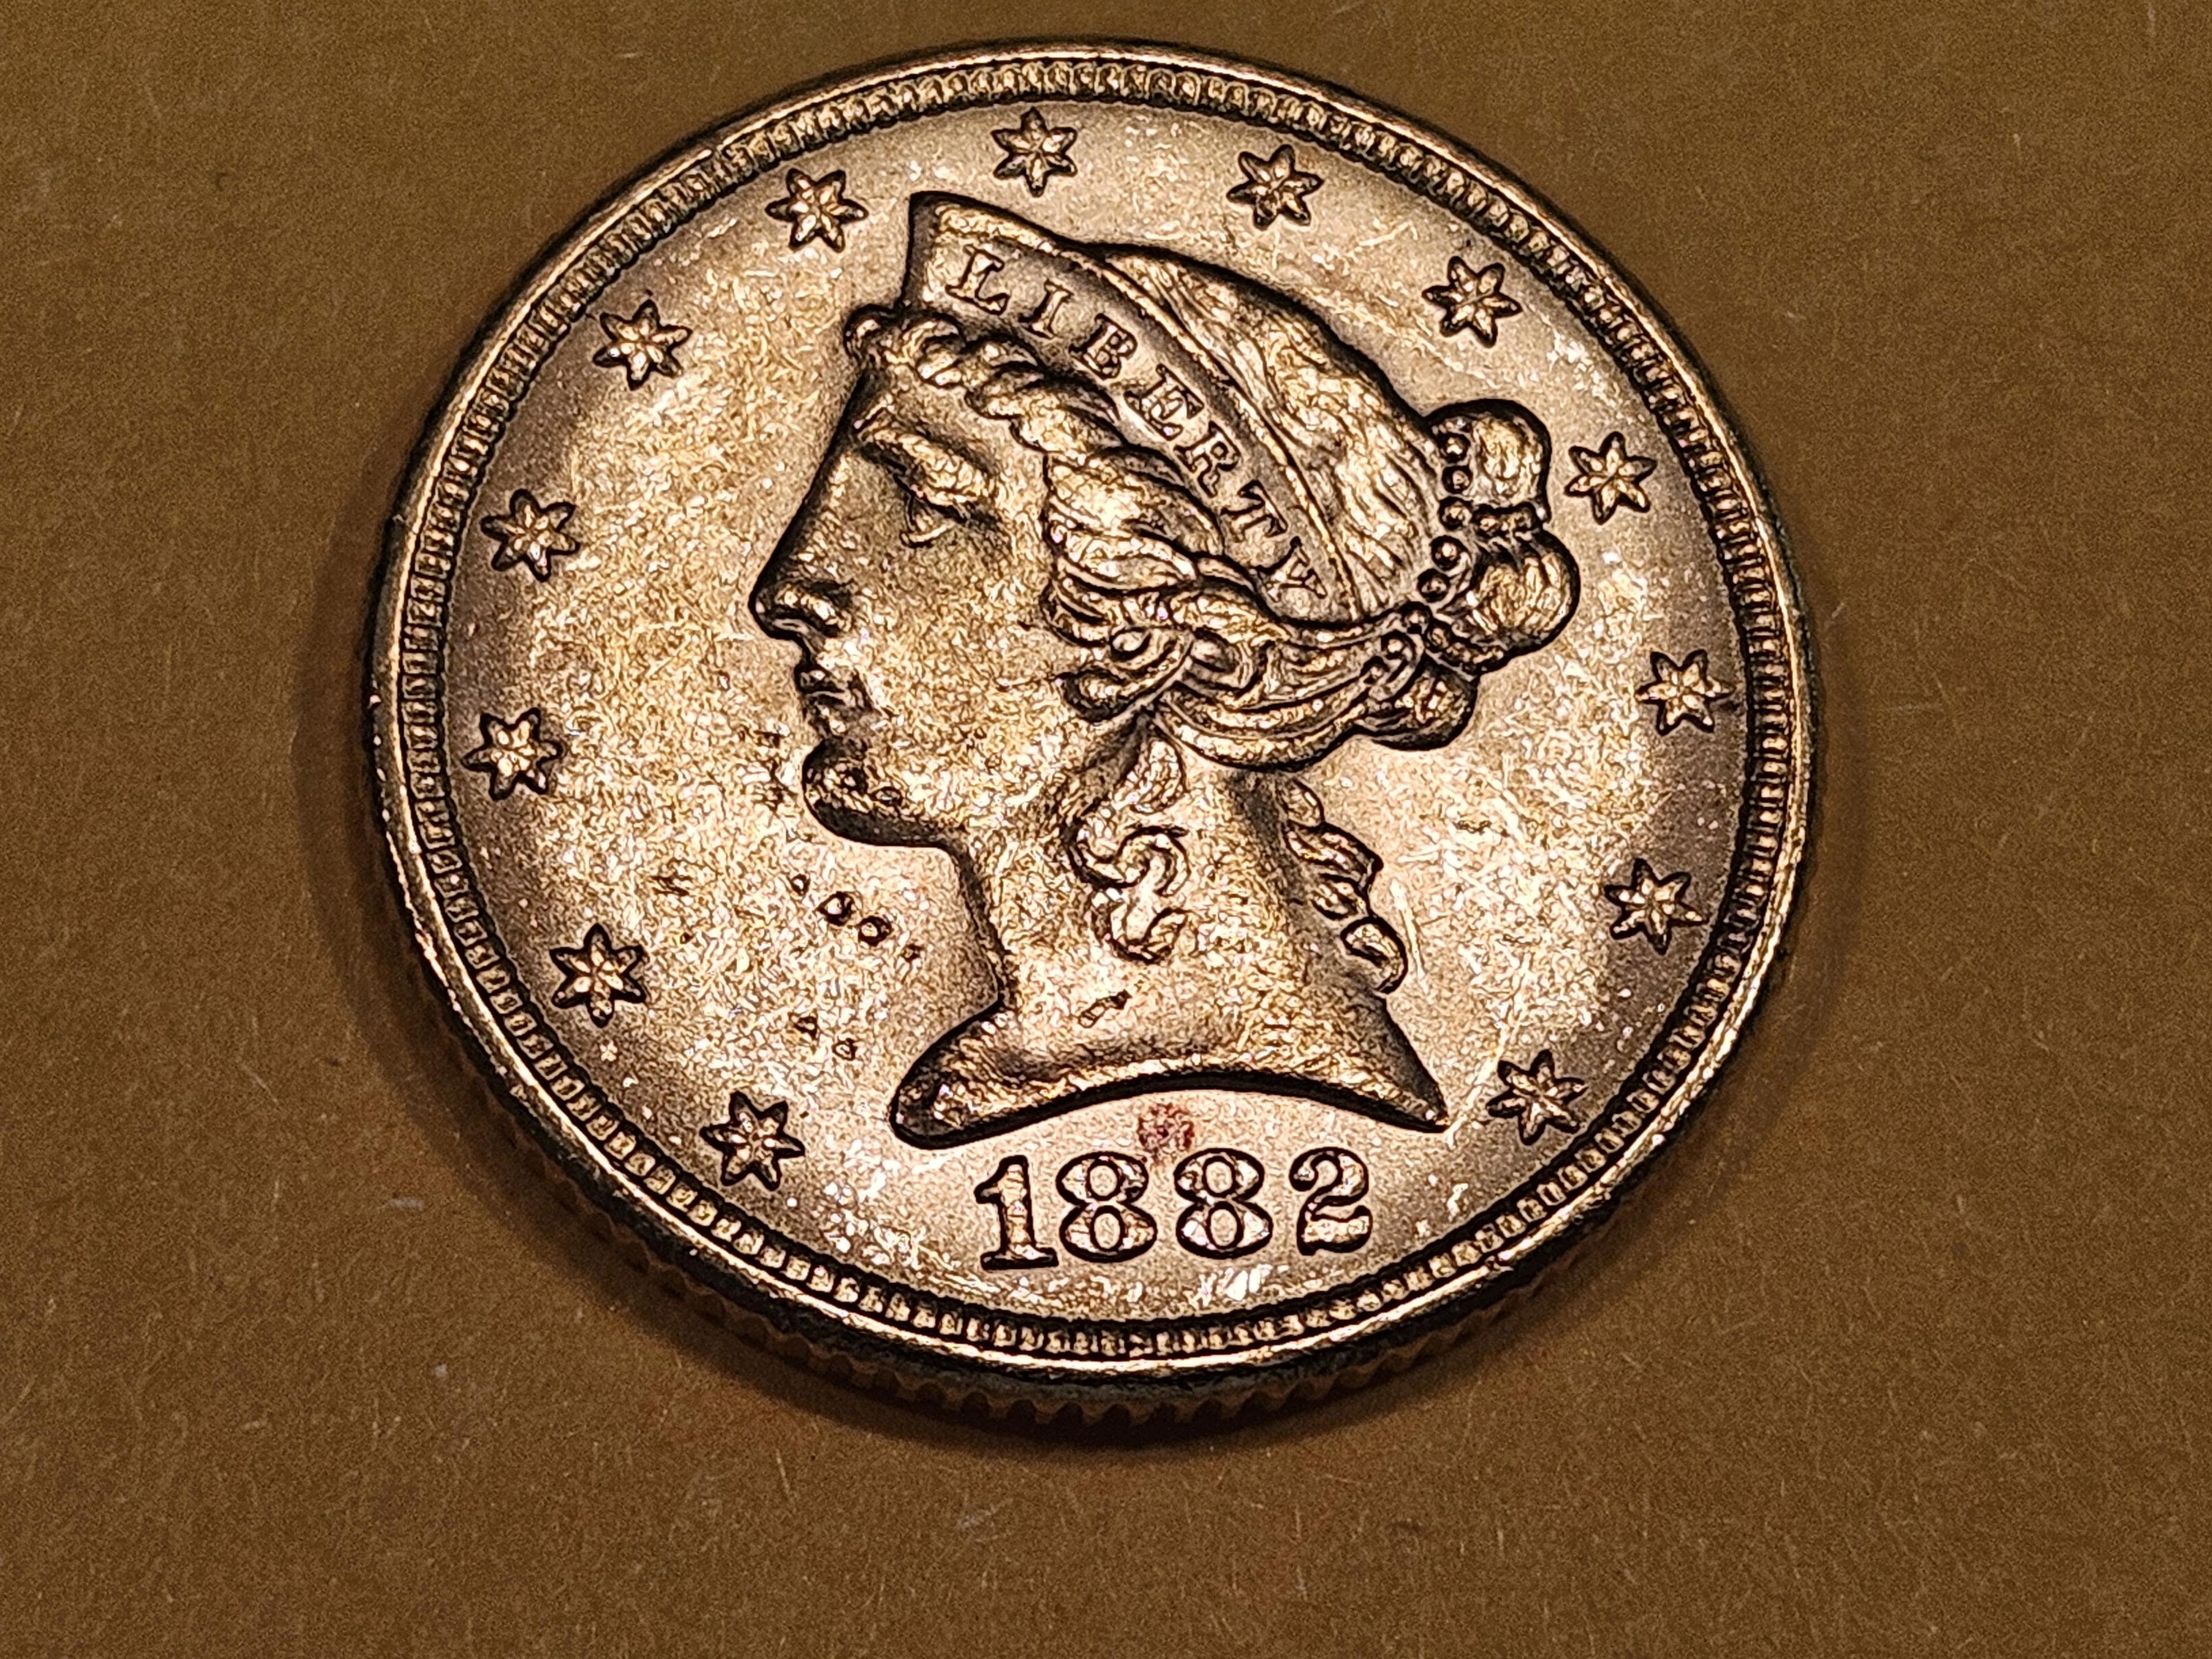 GOLD! Brilliant Uncirculated 1881 Liberty Head Gold Five Dollars